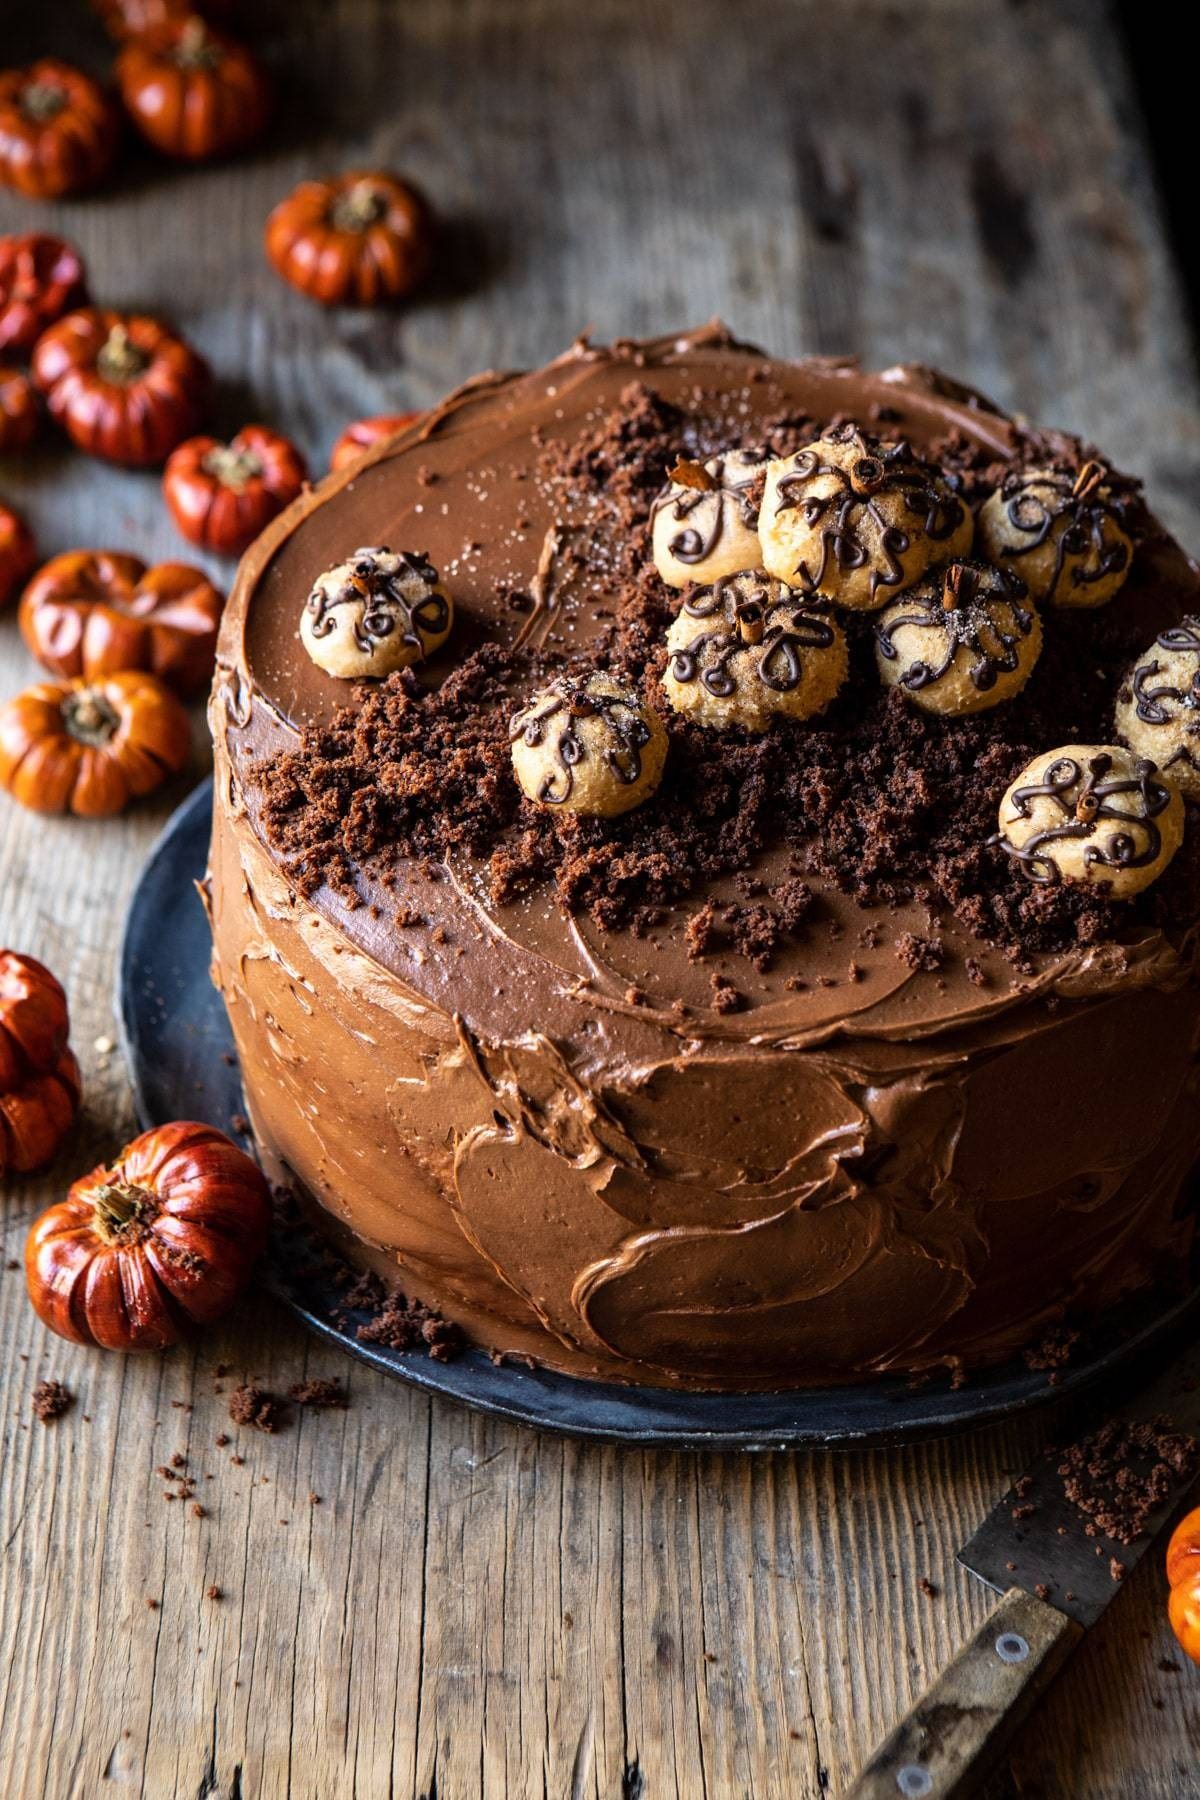 20 Best Halloween Cake Recipes & Decorating Ideas - Easy Halloween Cakes